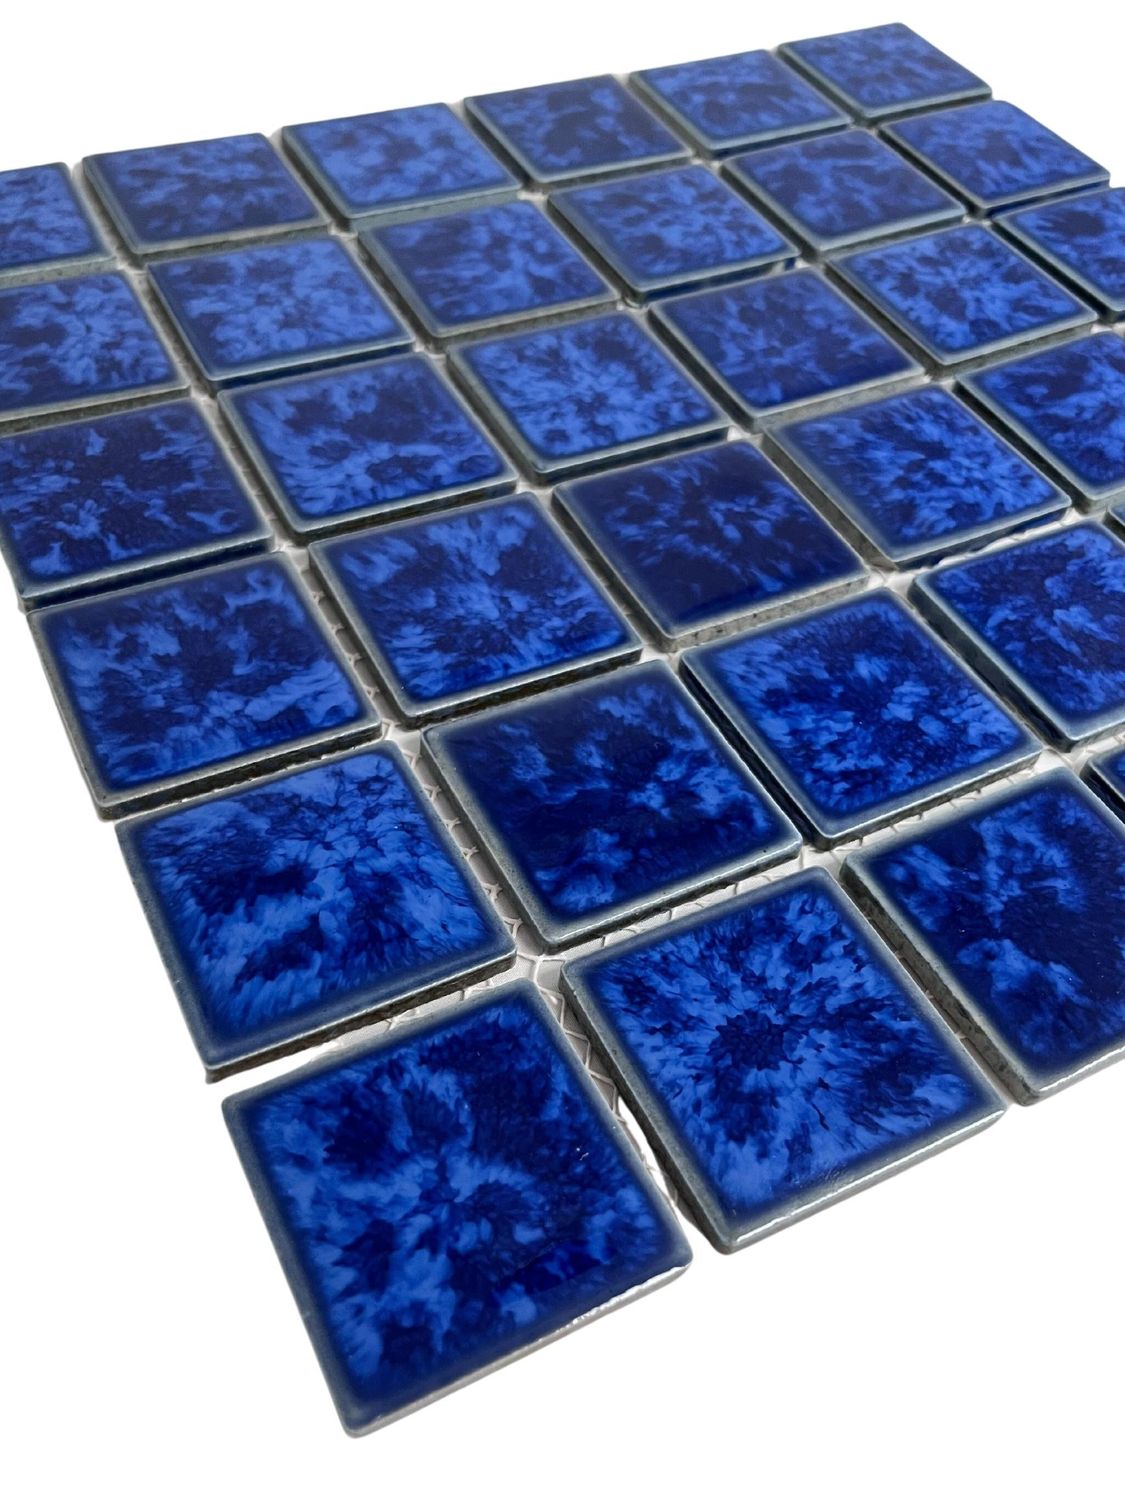 Tenedos Ultramarine Blue with Water Splash Effect Square 2x2 Porcelain Pool Mosaic Floor and Wall Tile for Backsplash, Kitchen, Bathroom, Swimming Pool